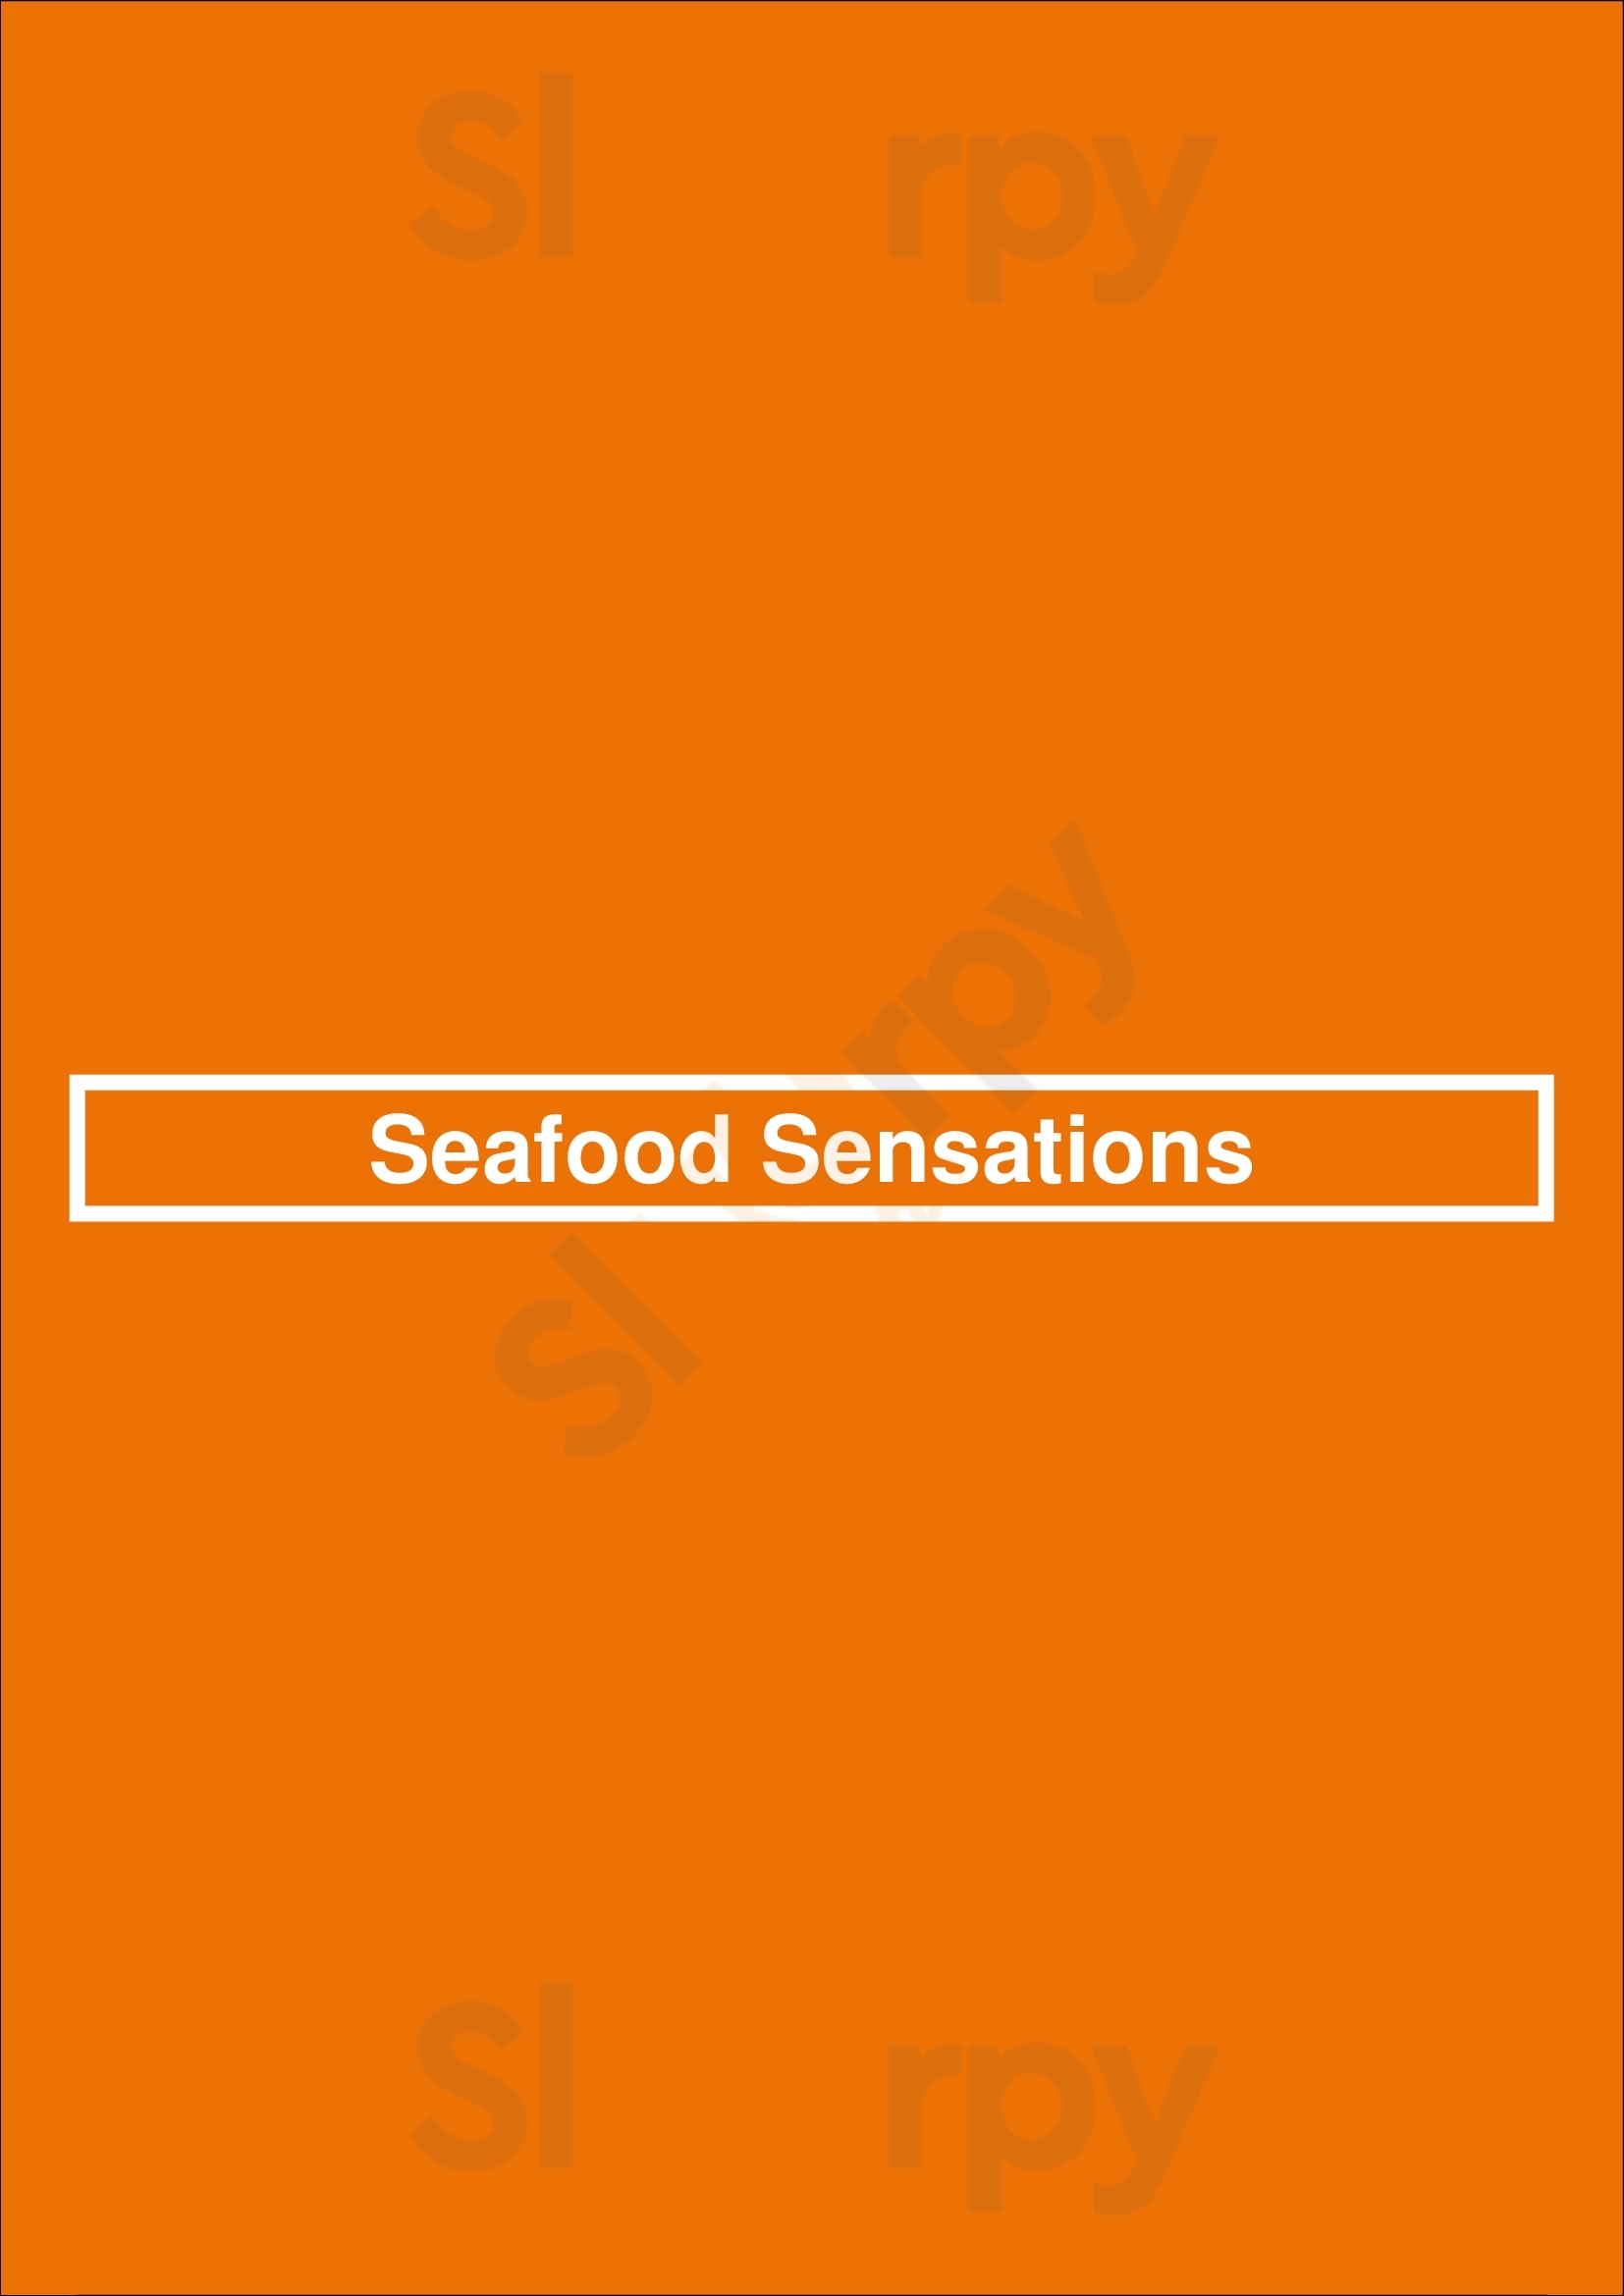 Seafood Sensations Nashville Menu - 1